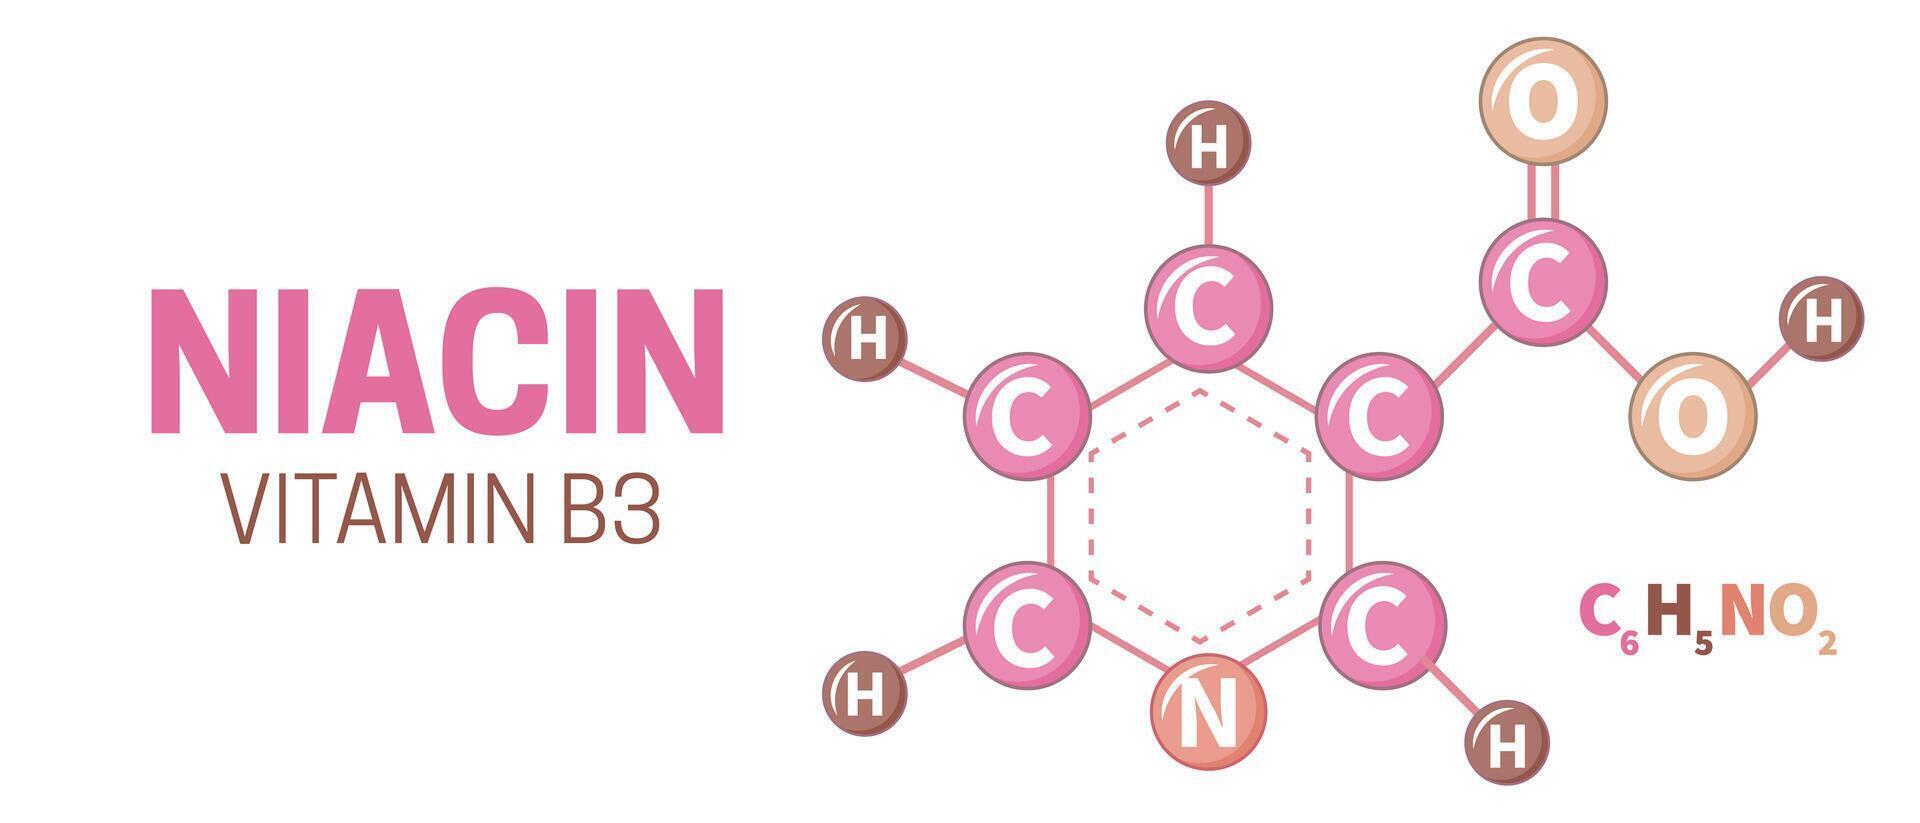 vitamine b3 niacine molécule structure formule illustration vecteur